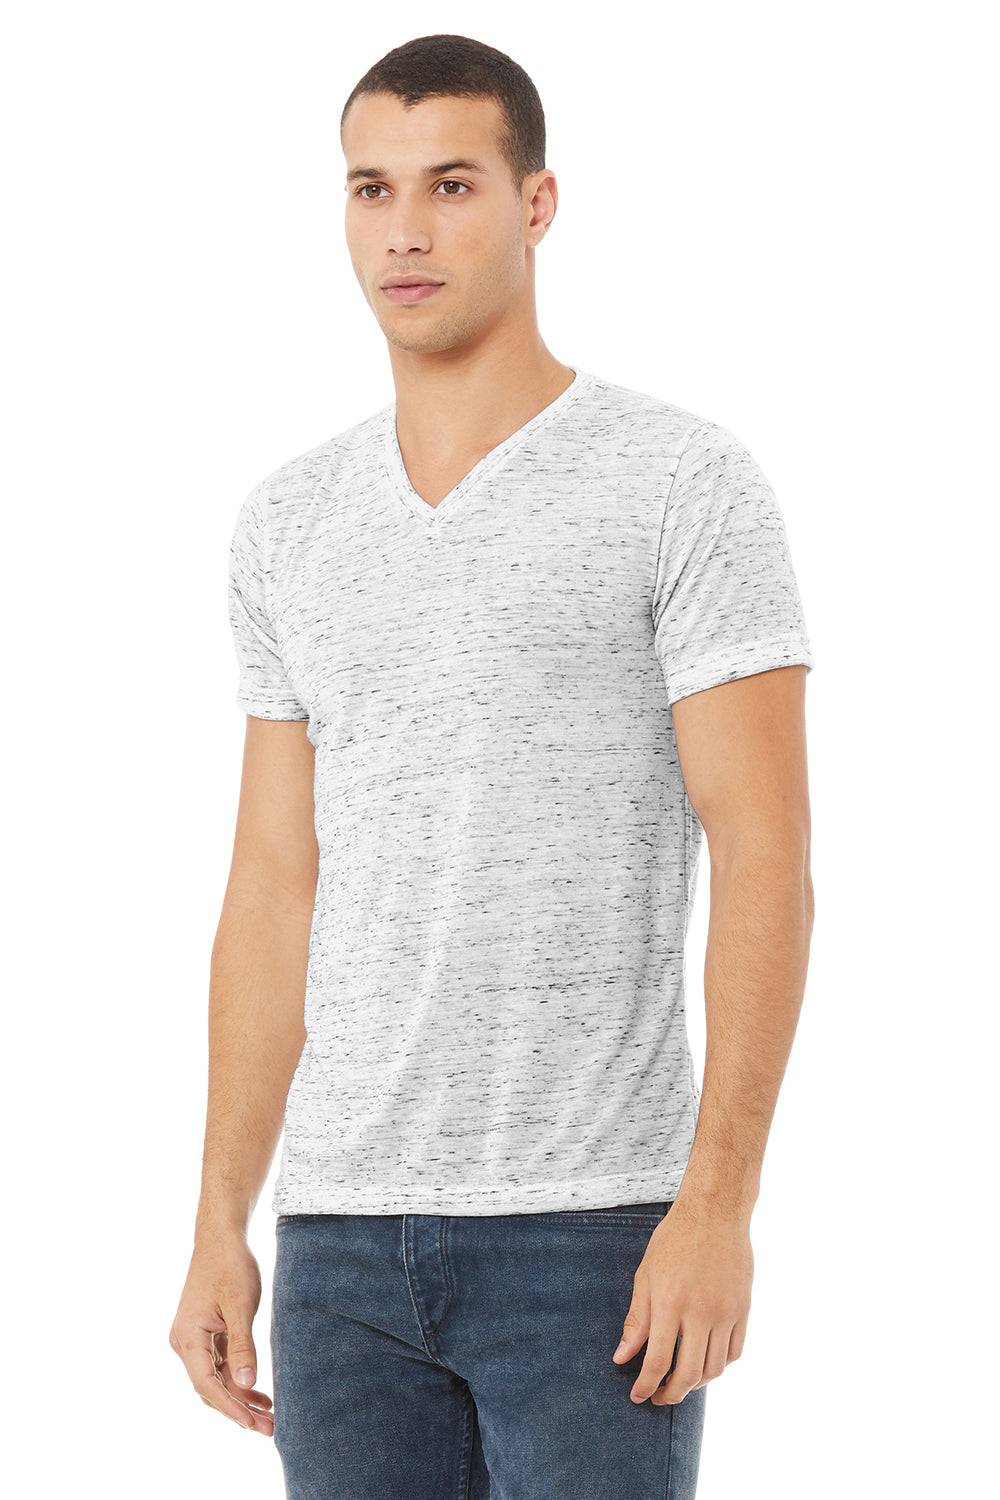 Bella + Canvas BC3005/3005/3655C Mens Jersey Short Sleeve V-Neck T-Shirt White Marble Model 3Q